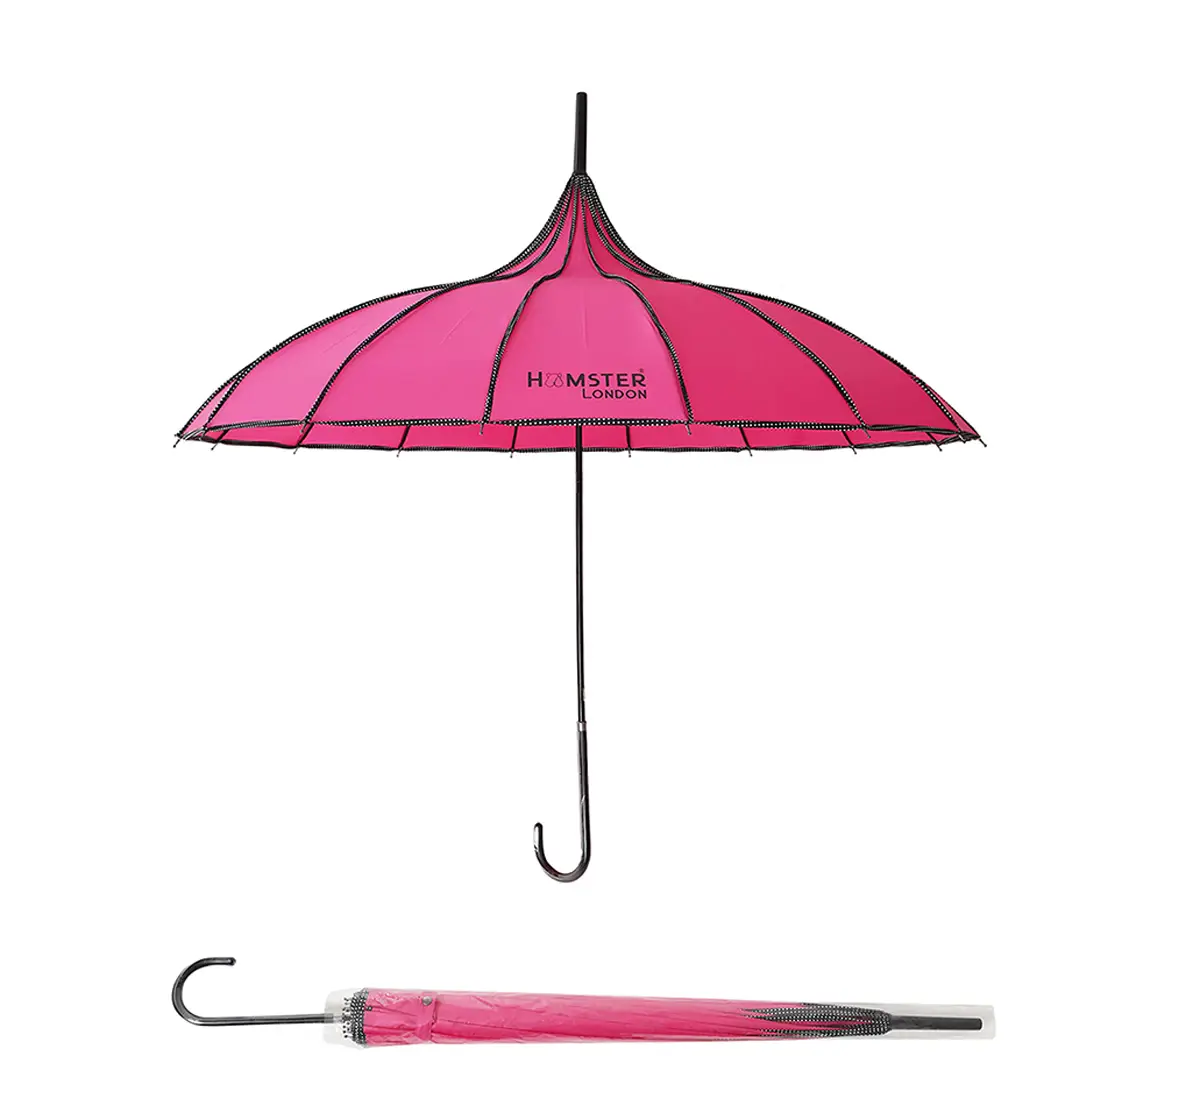 Fashionable Stunning Rustproof Sturdy Umbrella by Hamster London, Pink, 10Y+